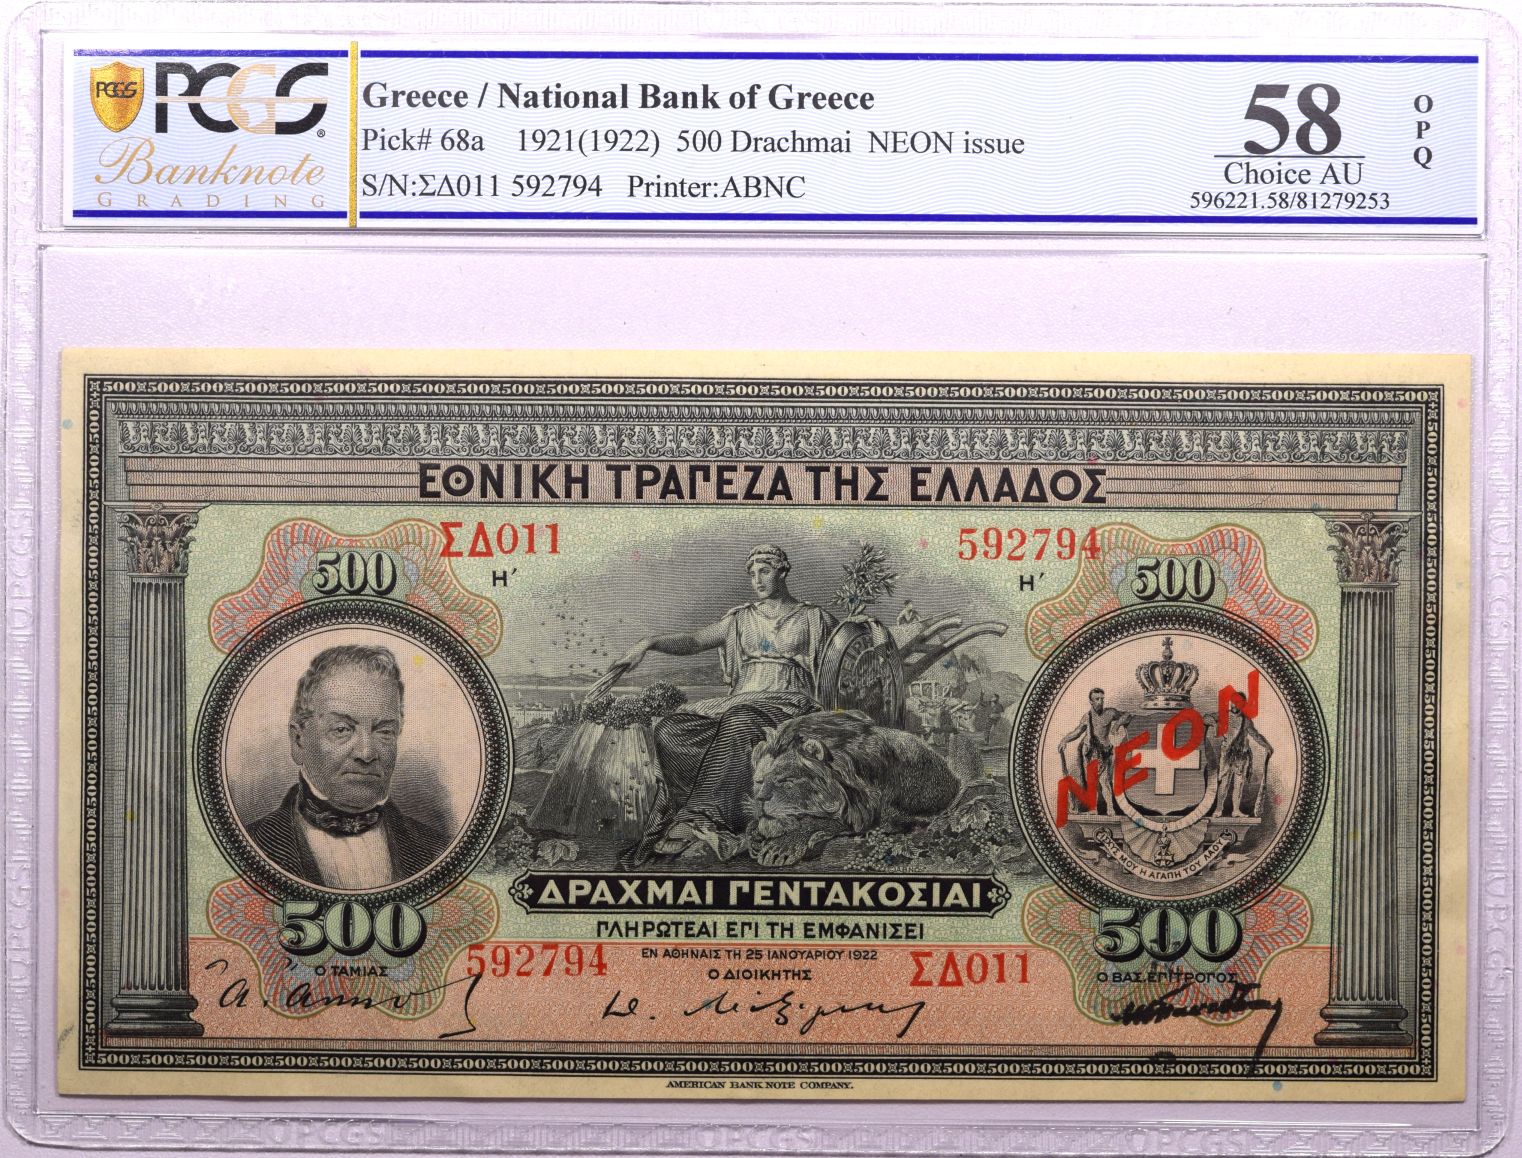 NEON (Yeni) damgalı Yunan Drahmisi banknotları